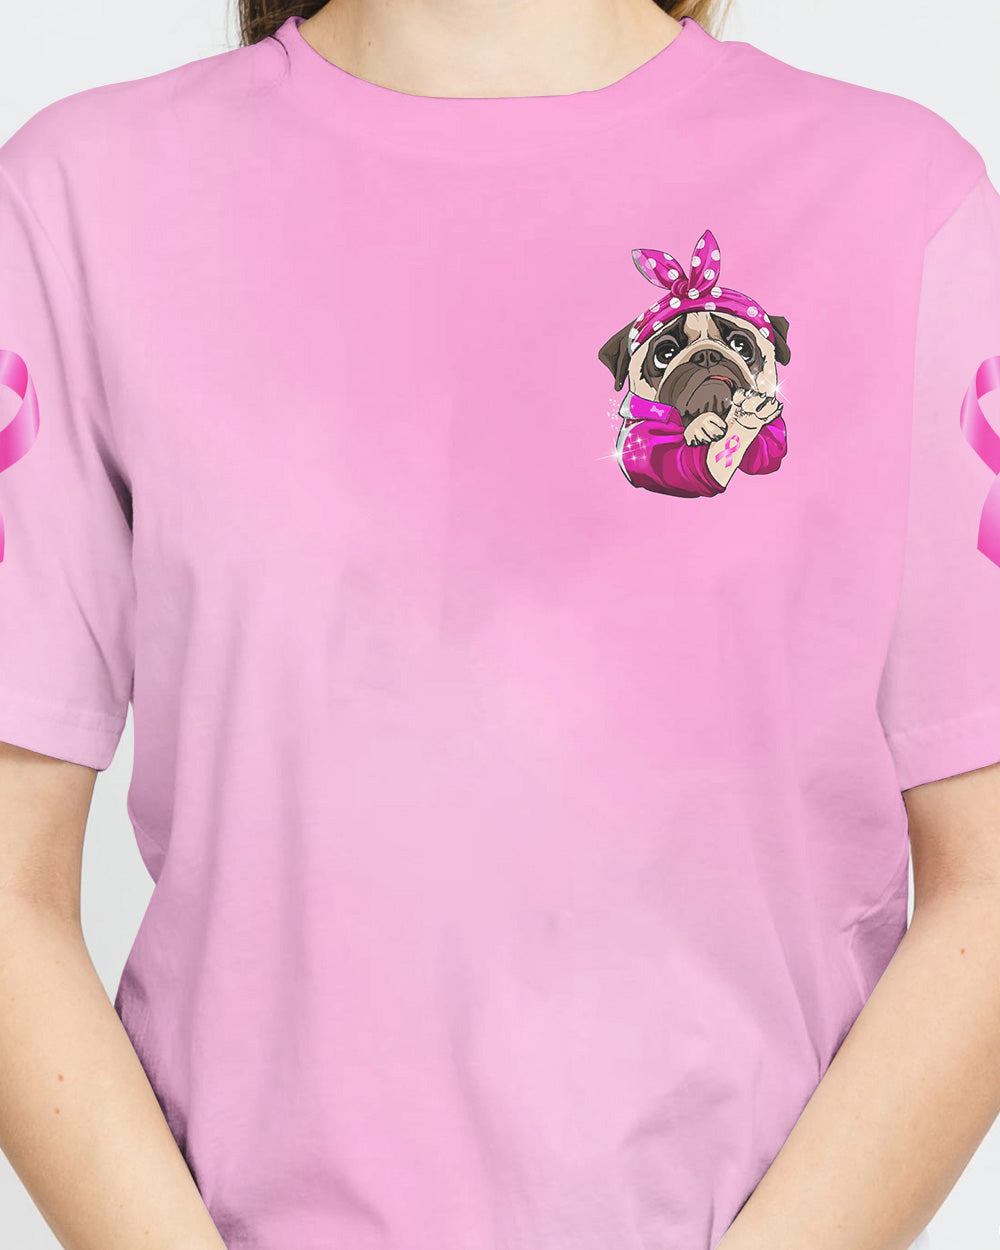 Think Pawsitive Pink Headband PullDog Women's Breast Cancer Awareness Tshirt